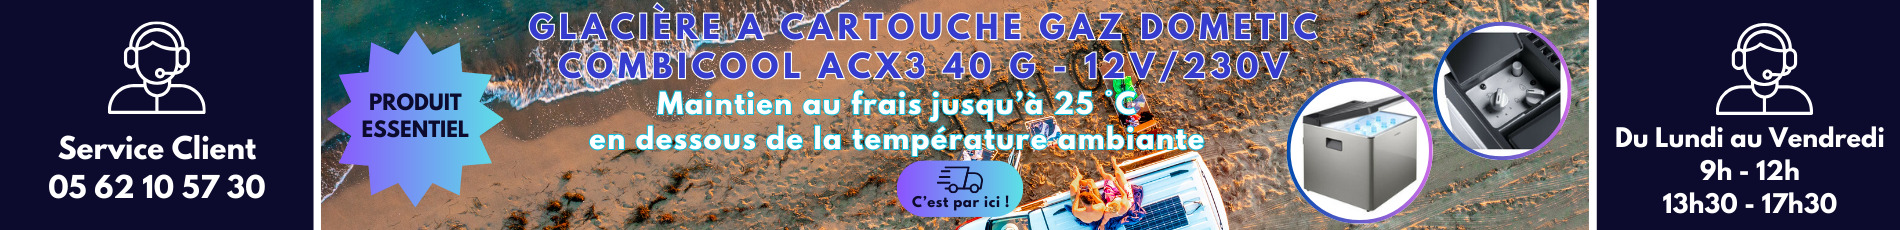 GLACIERE DOMETIC CombiCool ACX 40 G